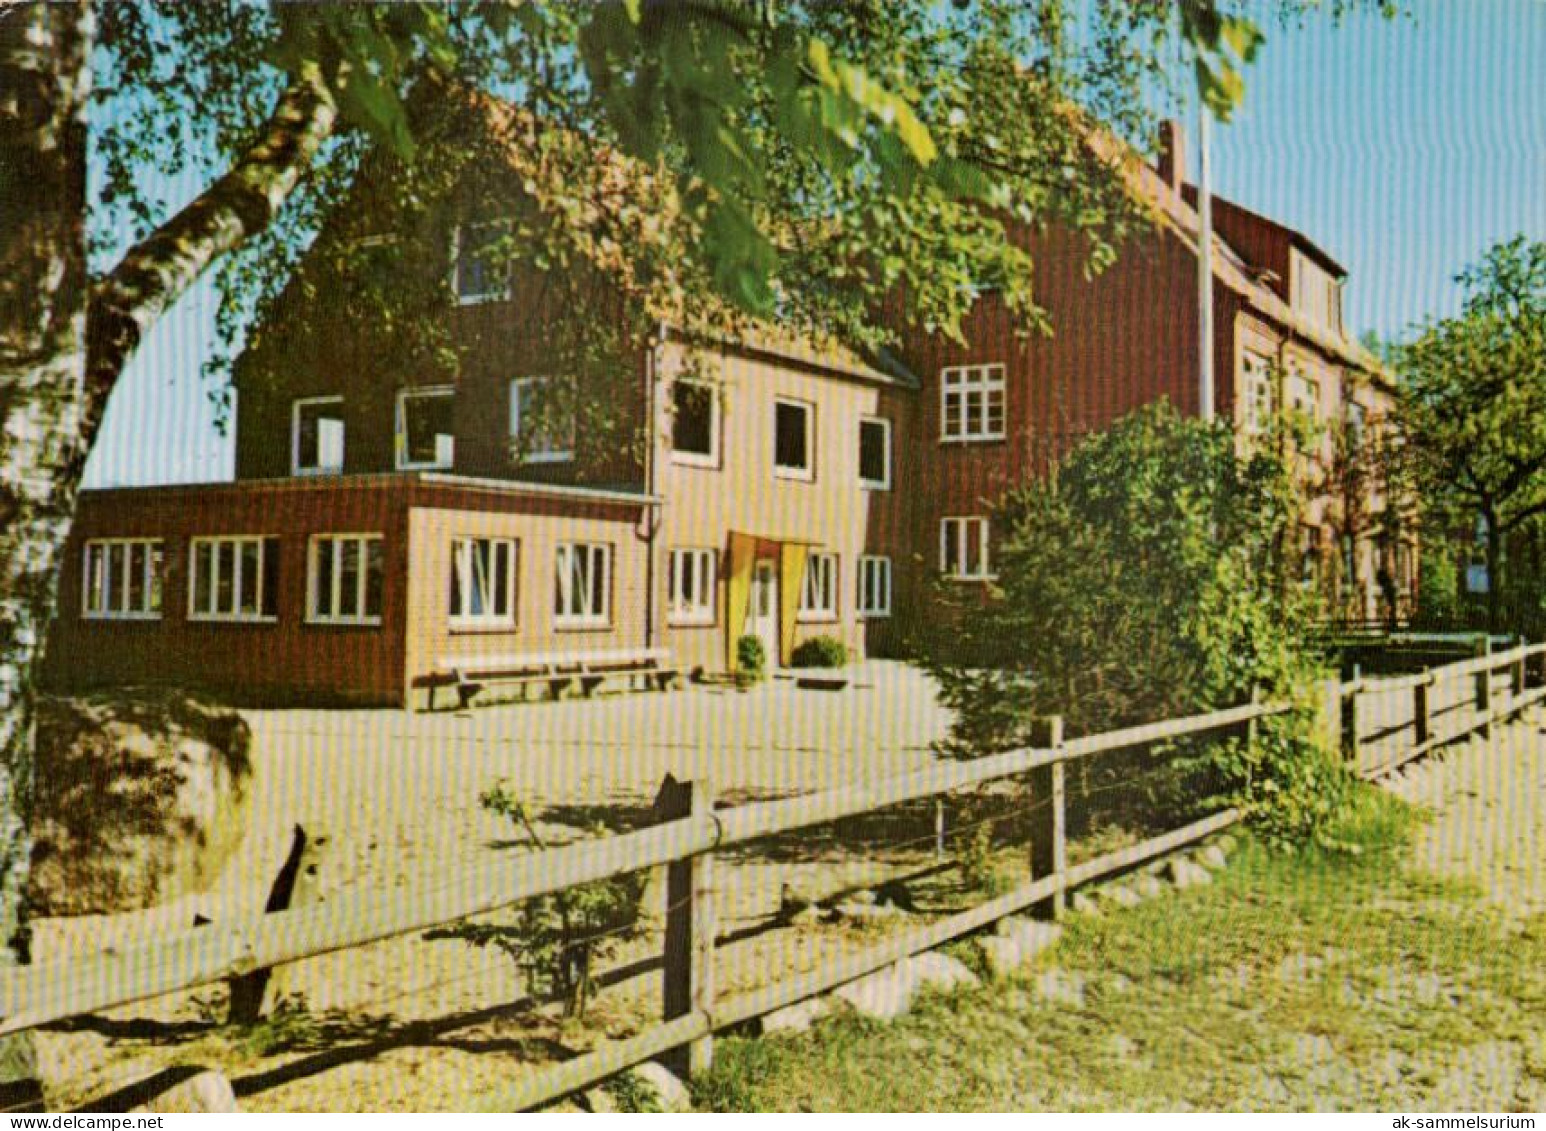 2105 Seevetal / Jugendheim Ohlendorf (D-A415) - Seevetal